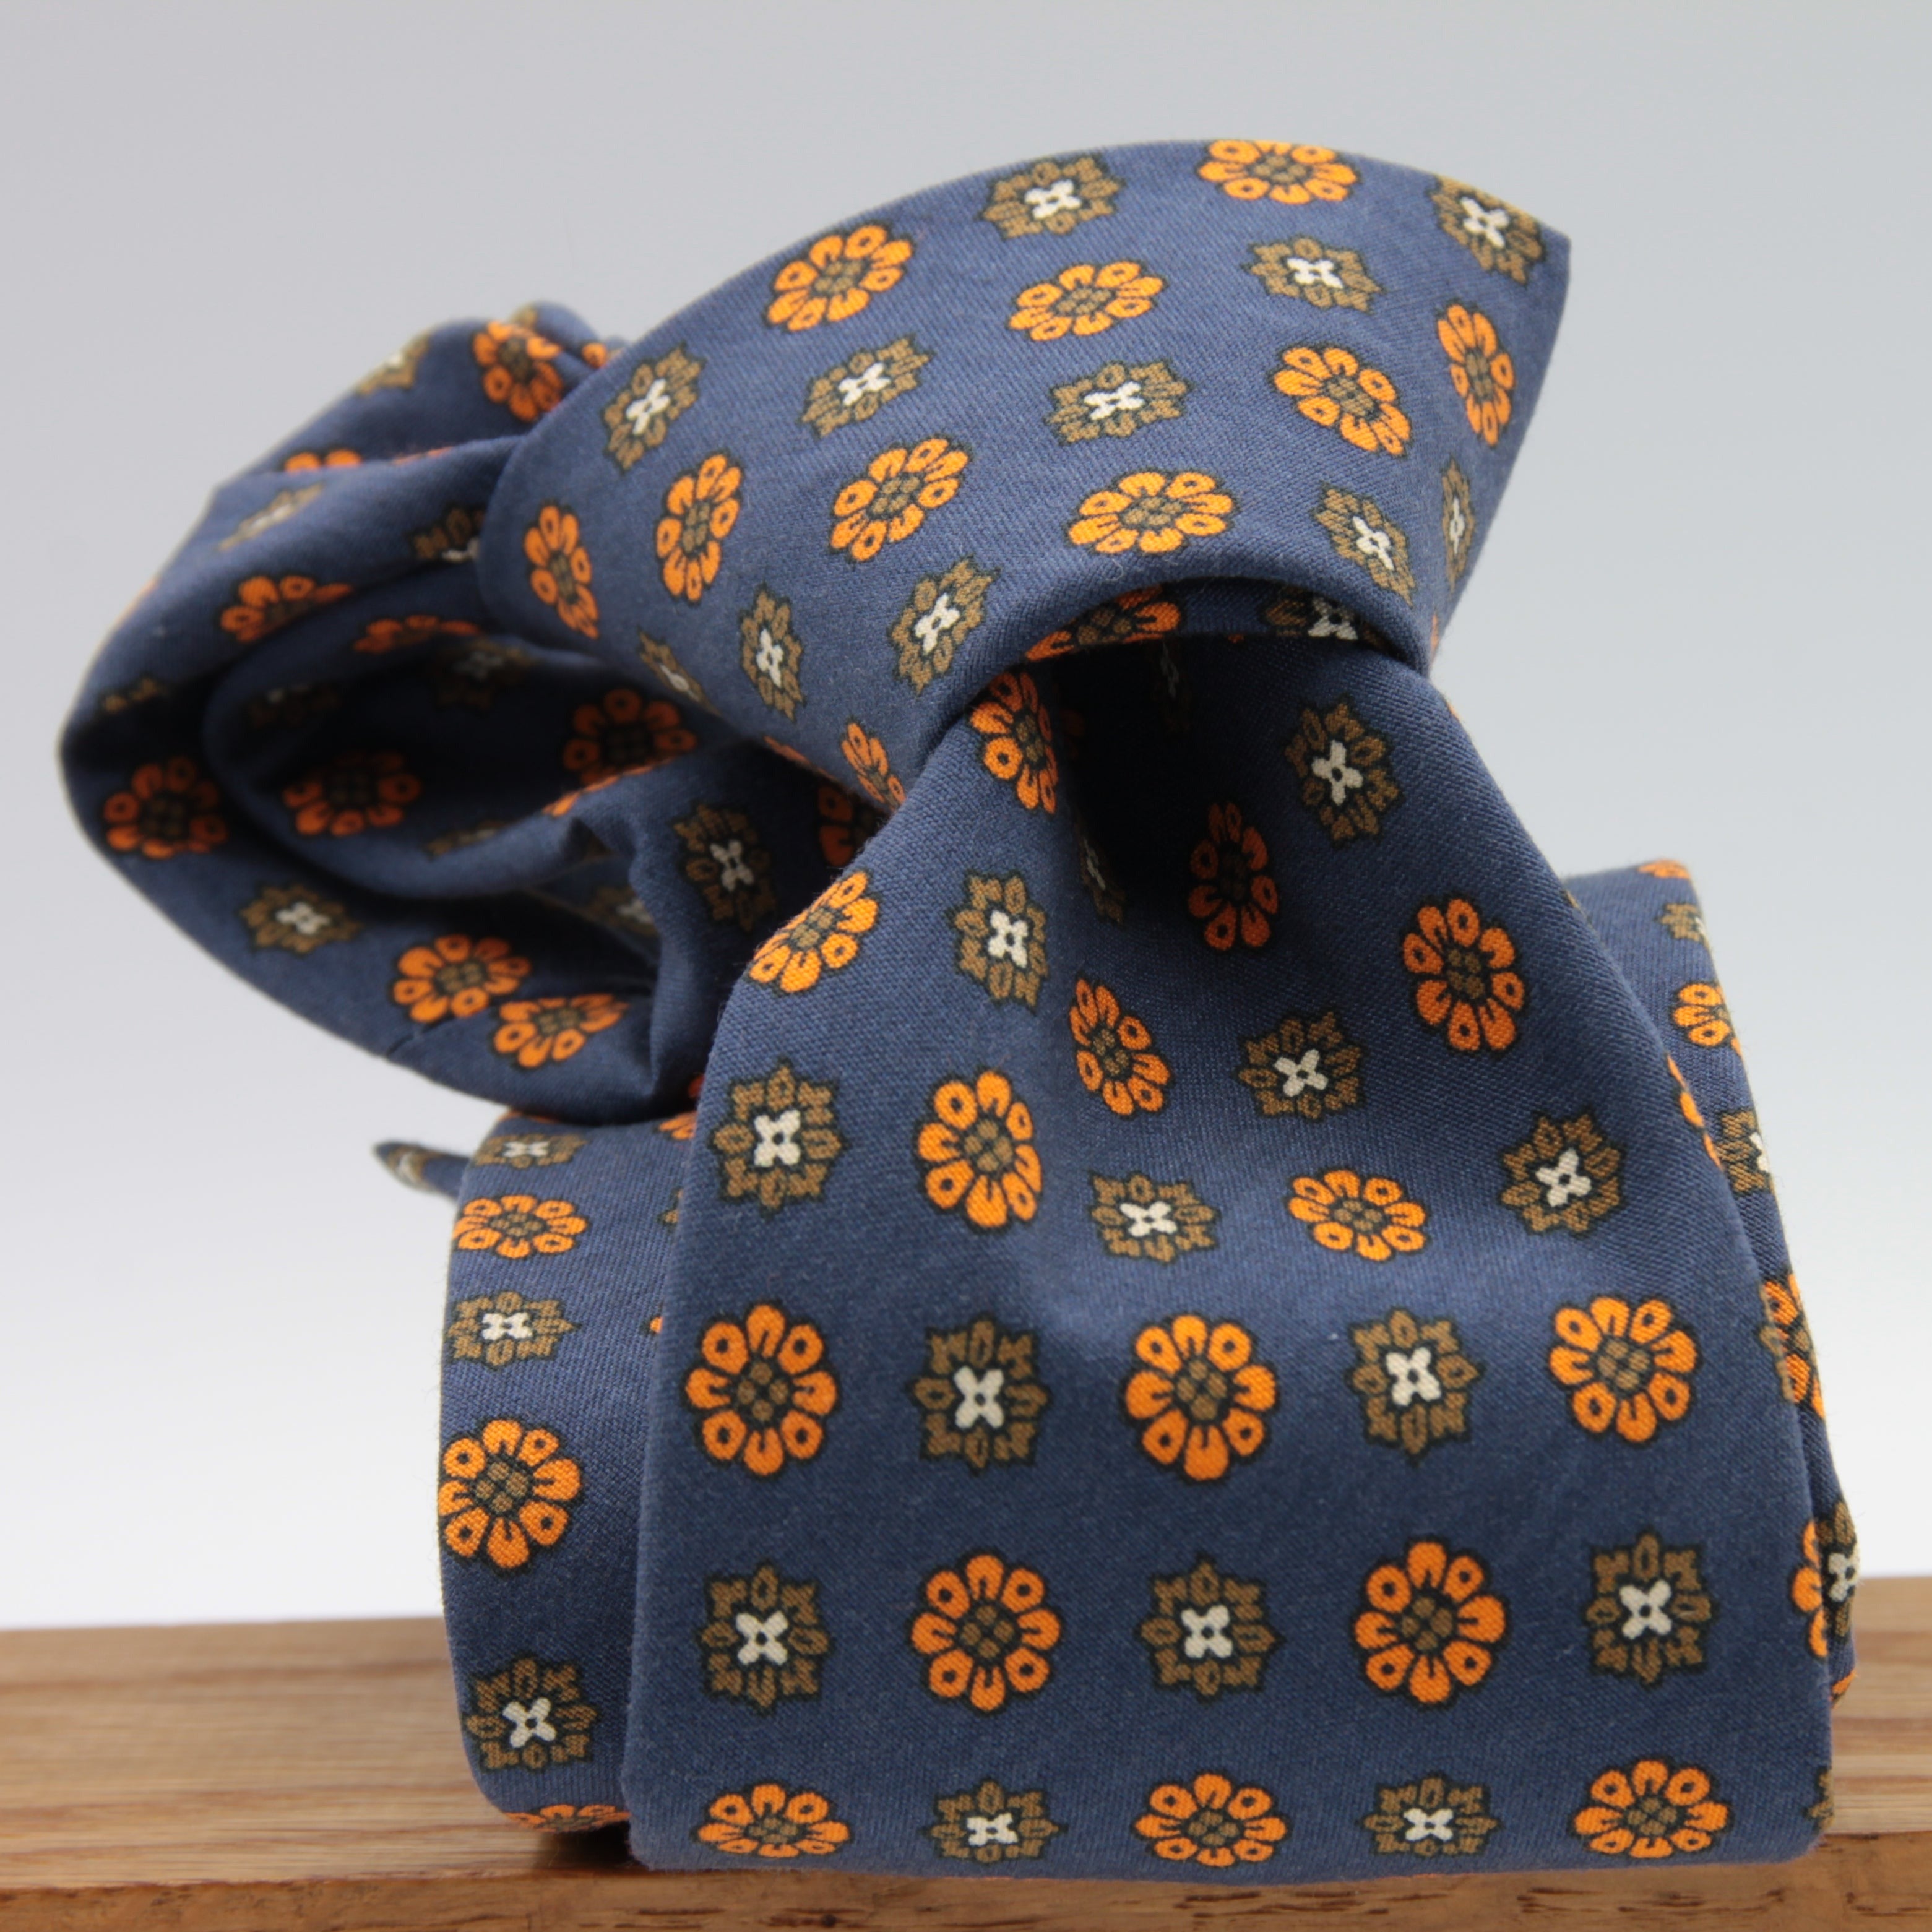 Cruciani & Bella 100% Printed Madder Silk  Italian fabric Unlined tie Blue, Orange and Brown Motifs Tie Handmade in Italy 8 cm x 150 cm #7632